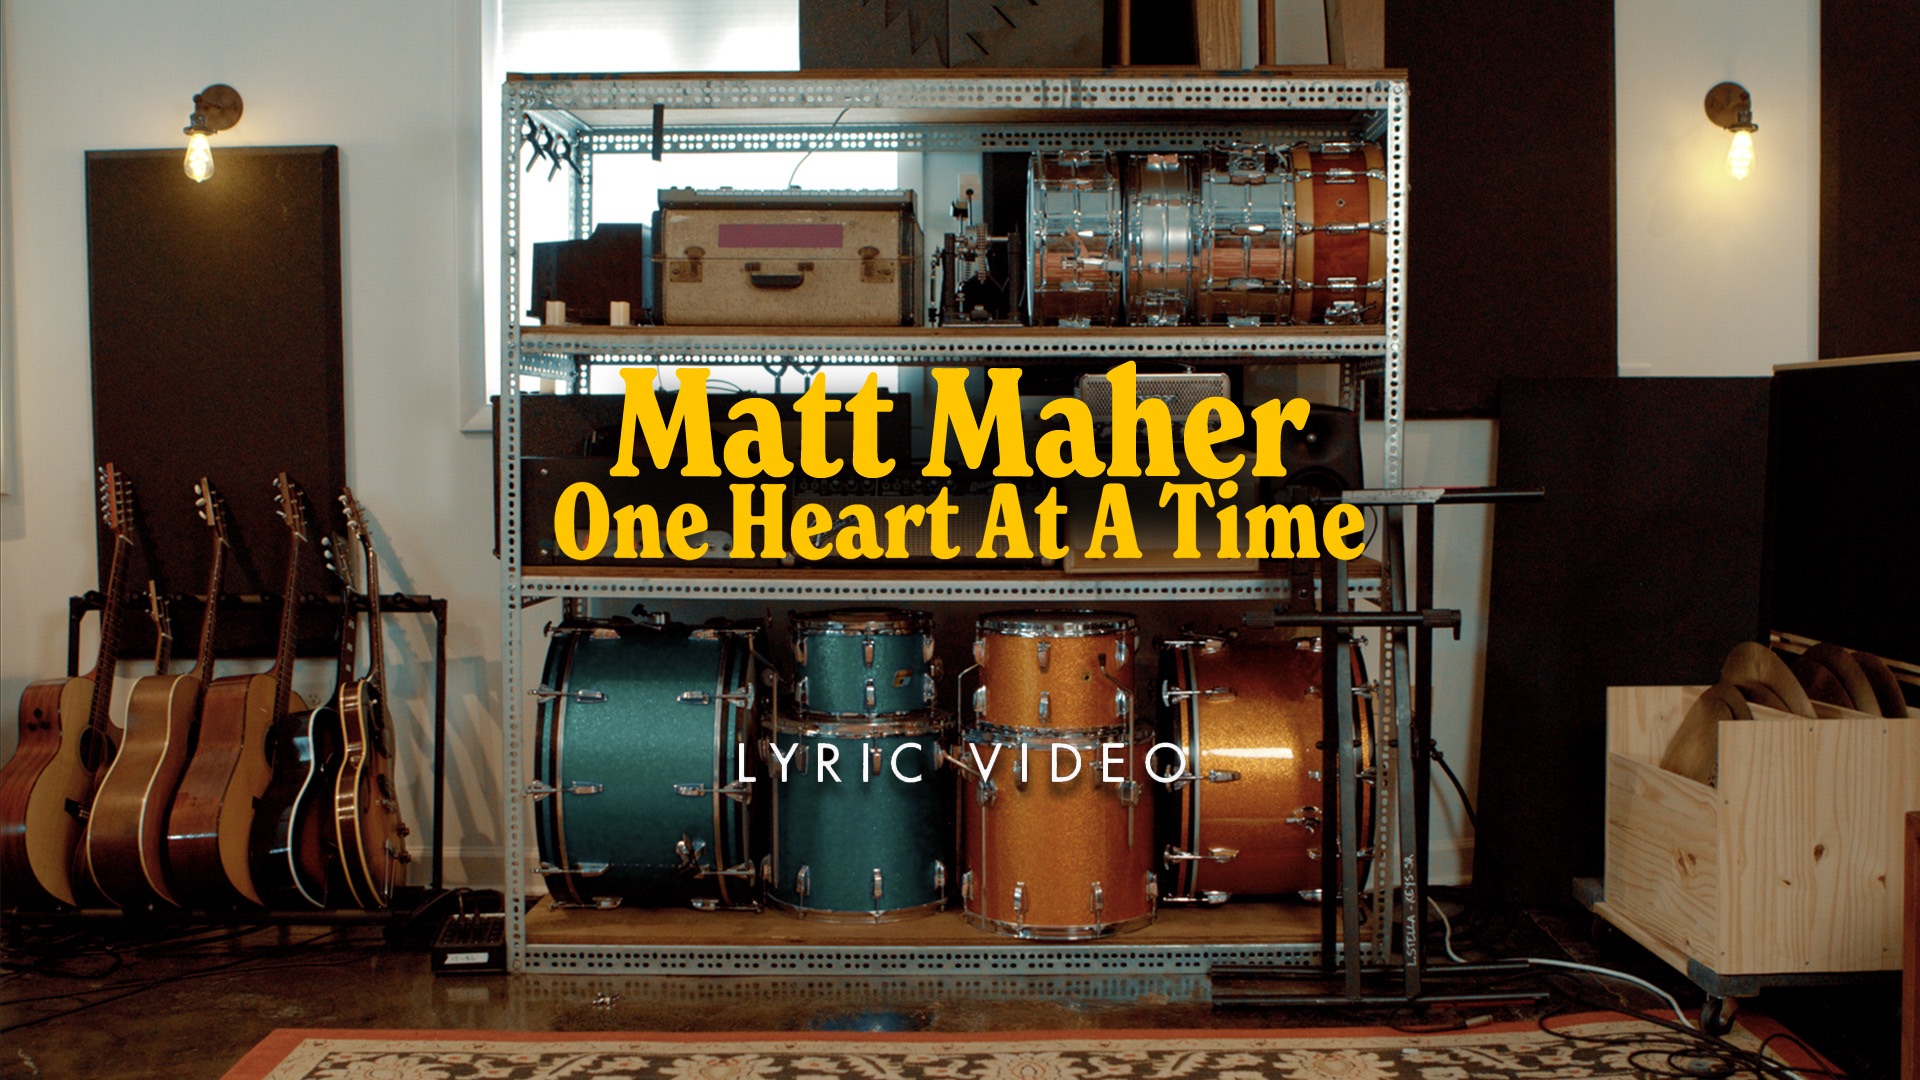 Matt Maher – Your Love Defends Me Lyrics